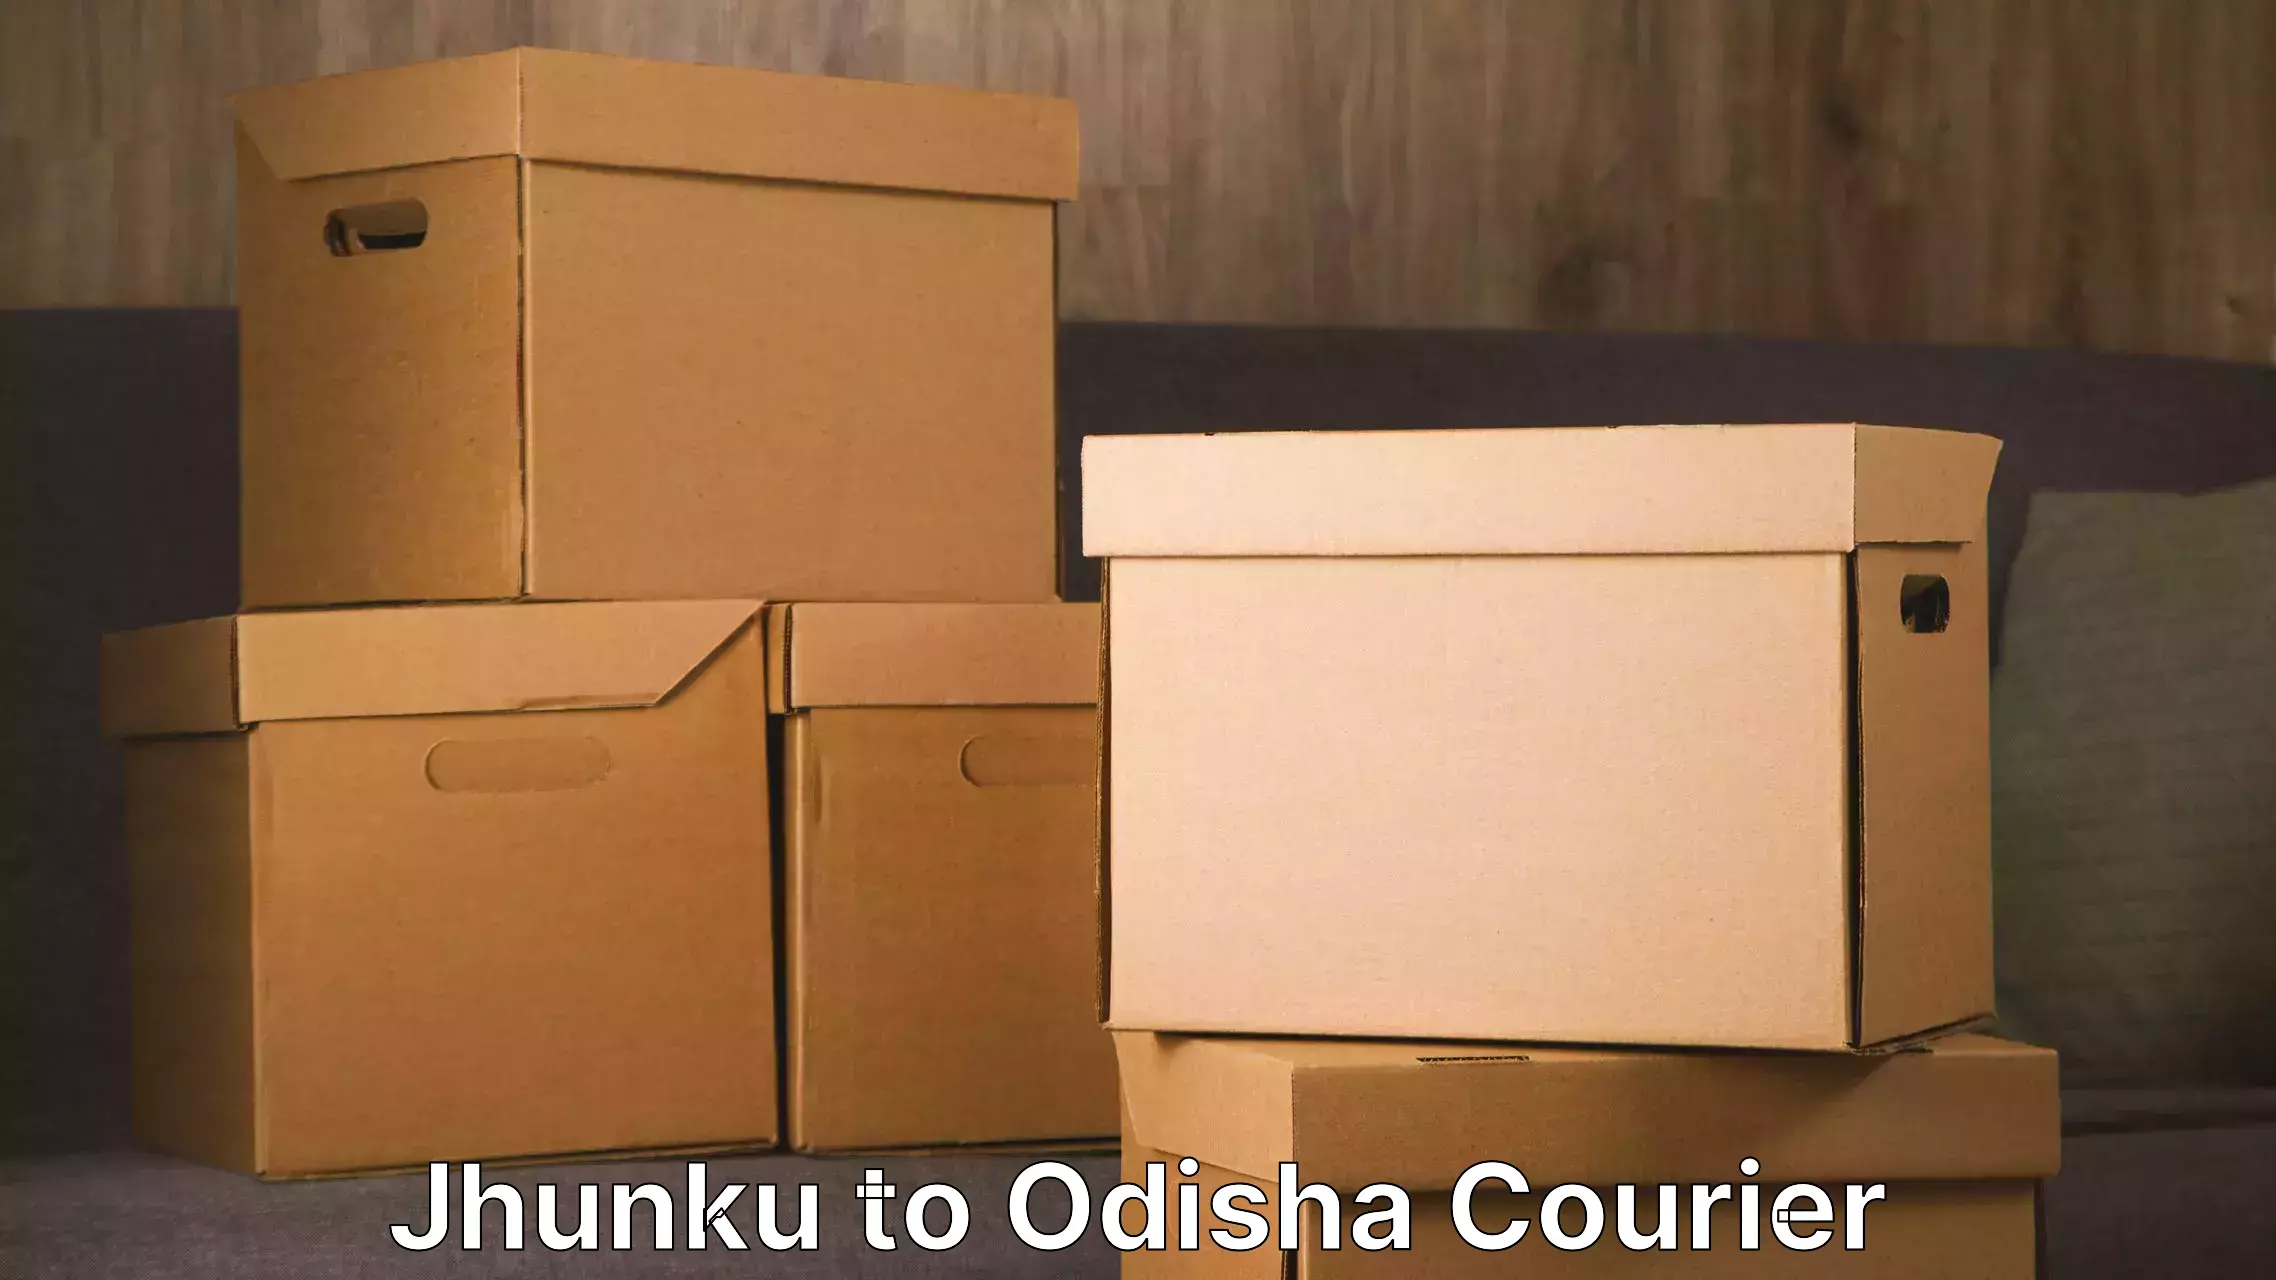 Furniture relocation experts Jhunku to Odisha